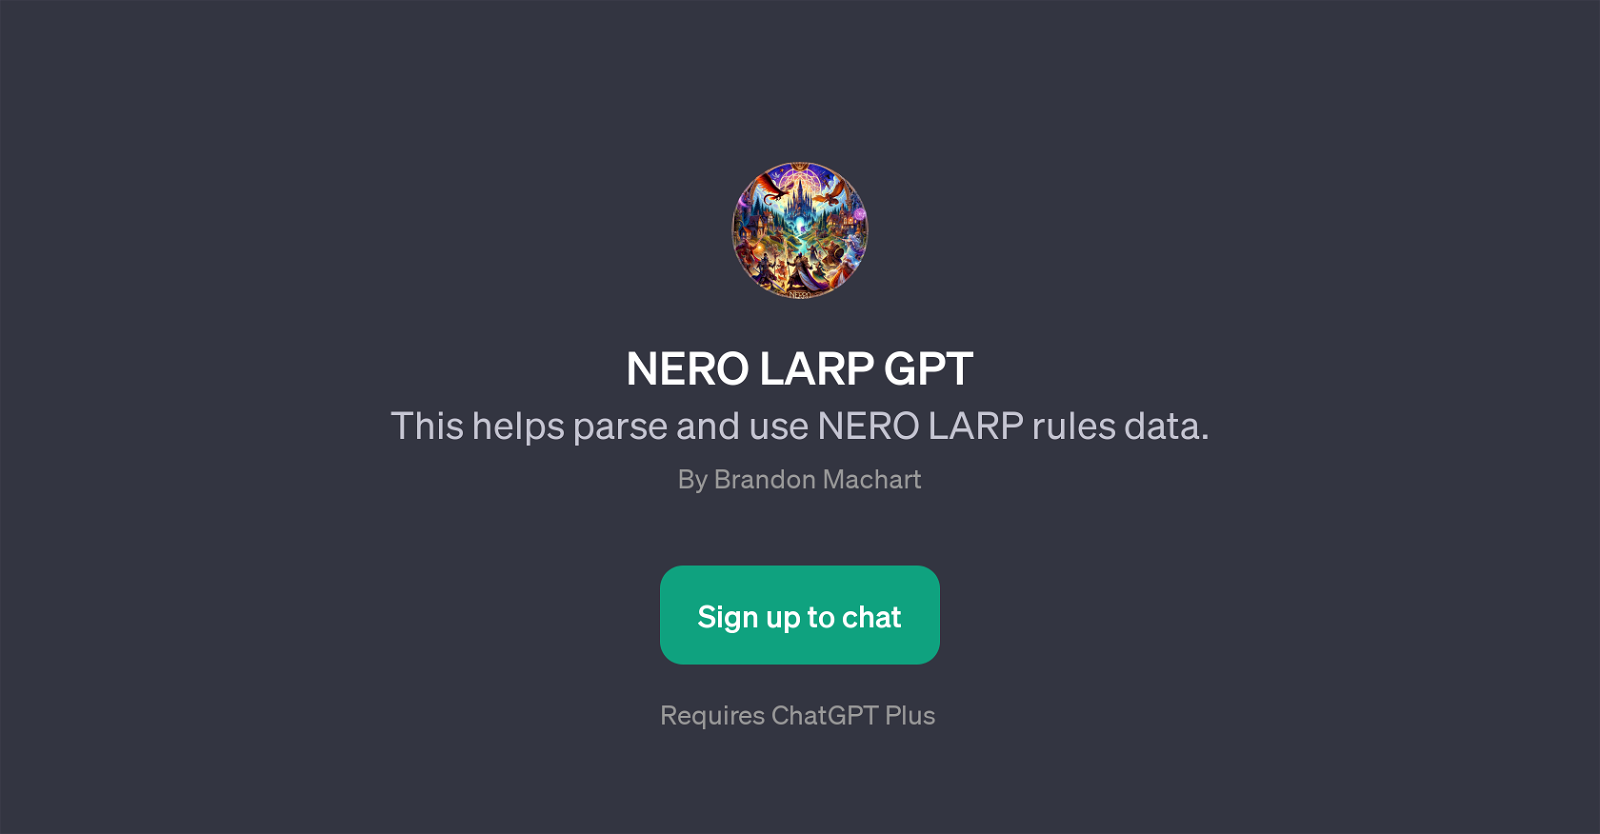 NERO LARP GPT website